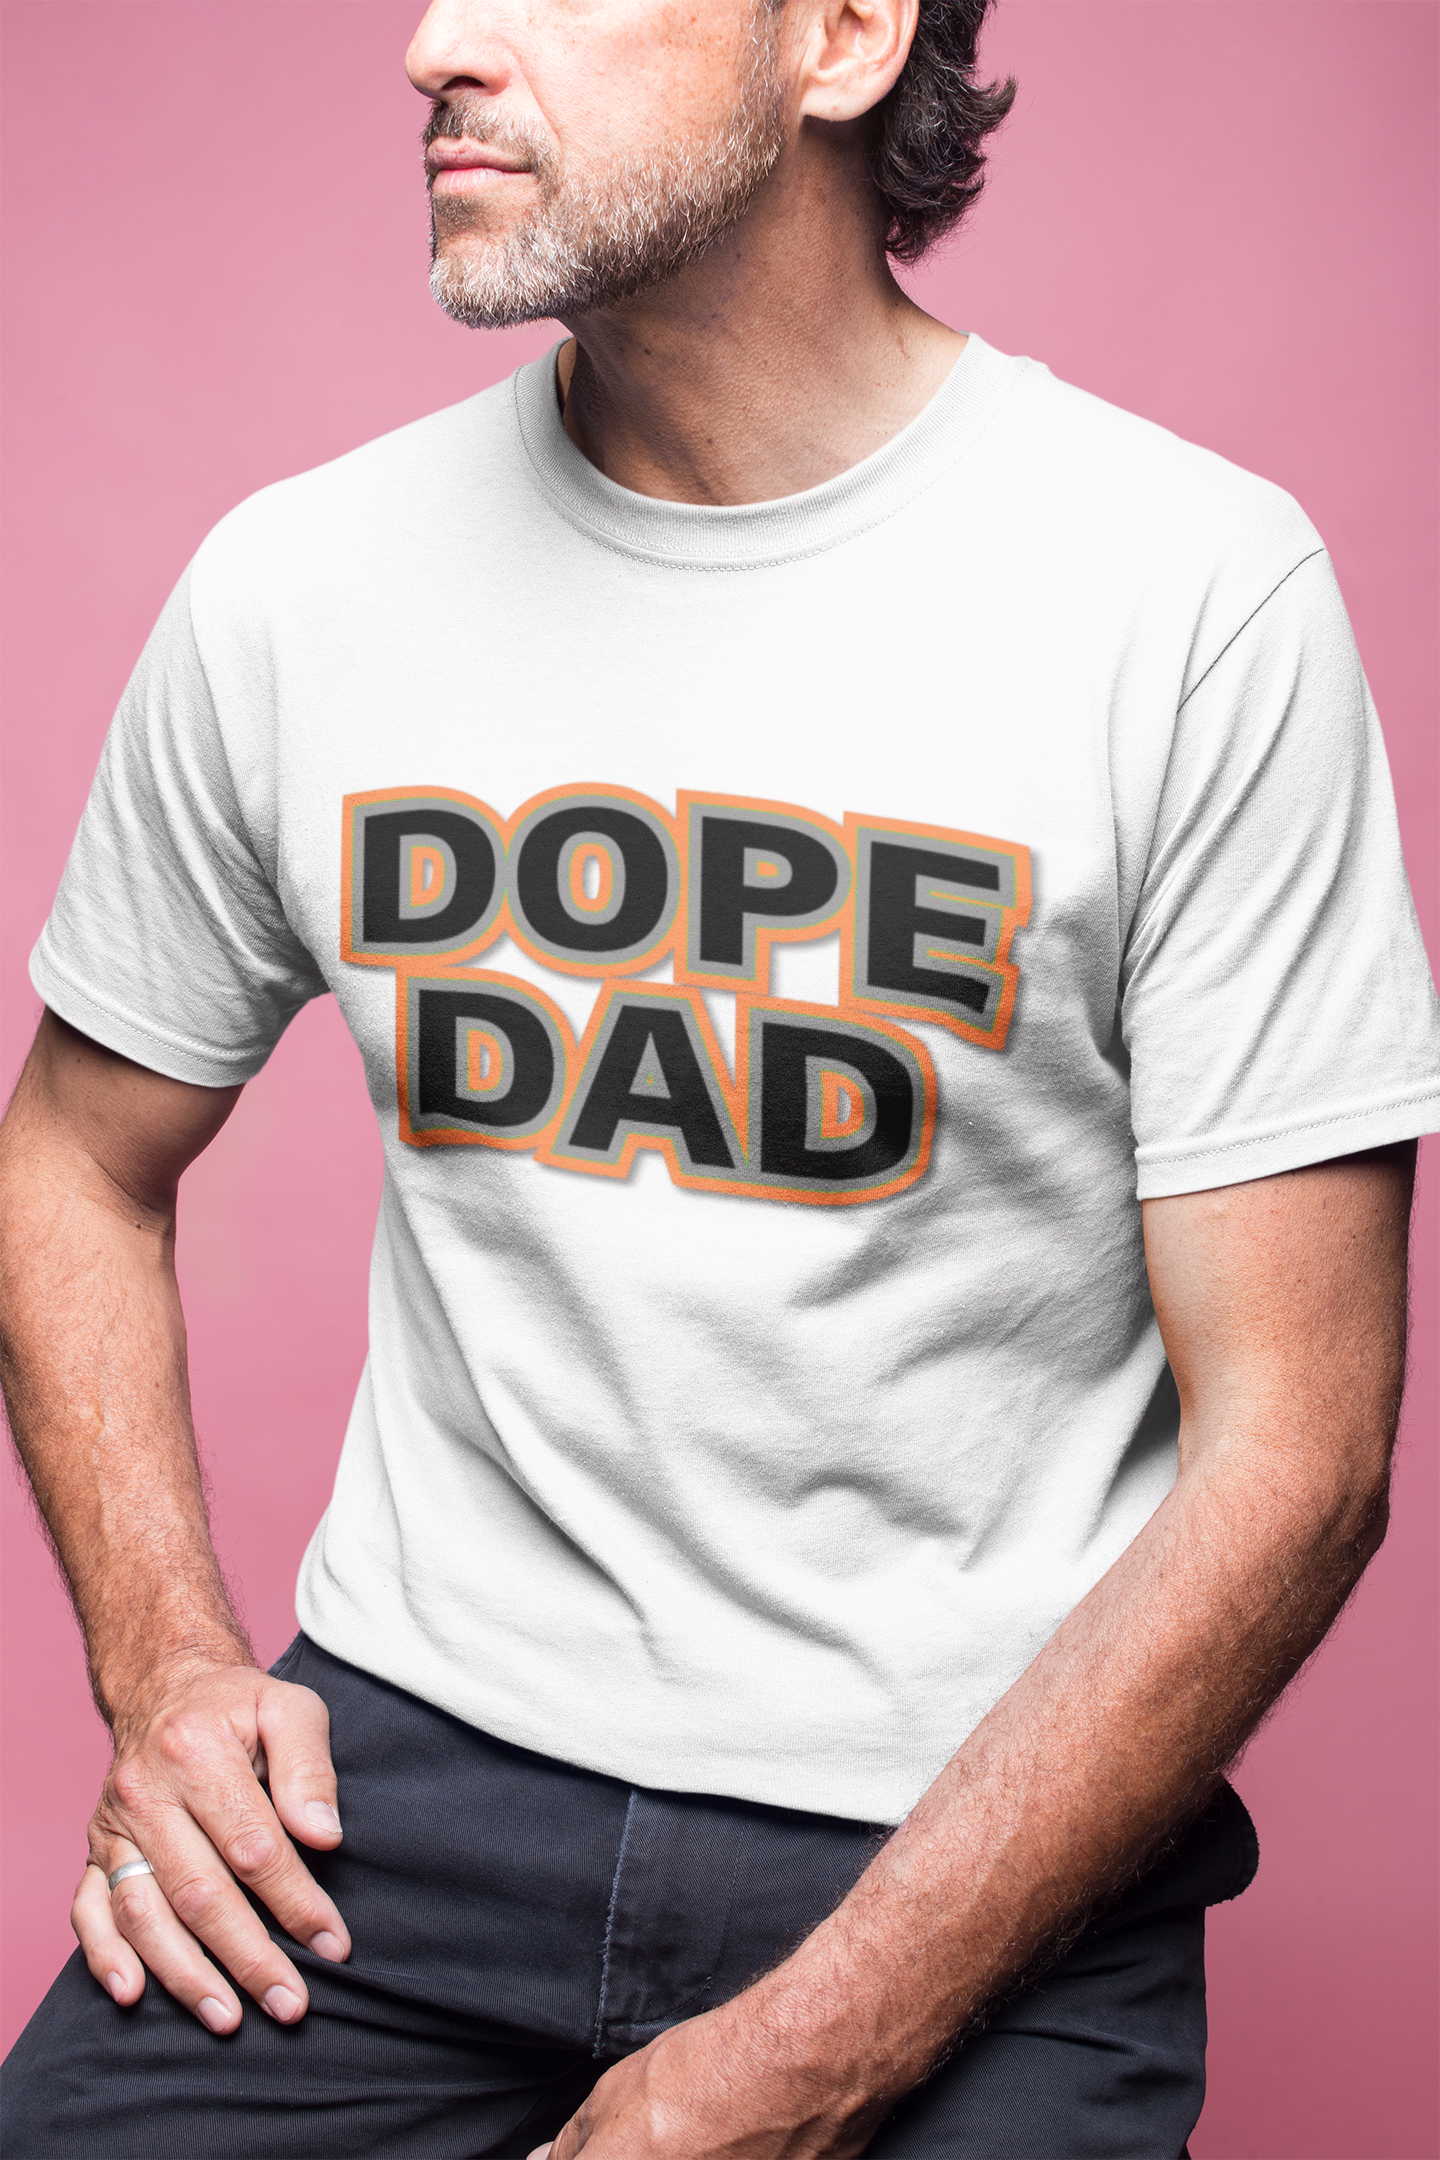 DOPE DAD T-SHIRT OR TANK